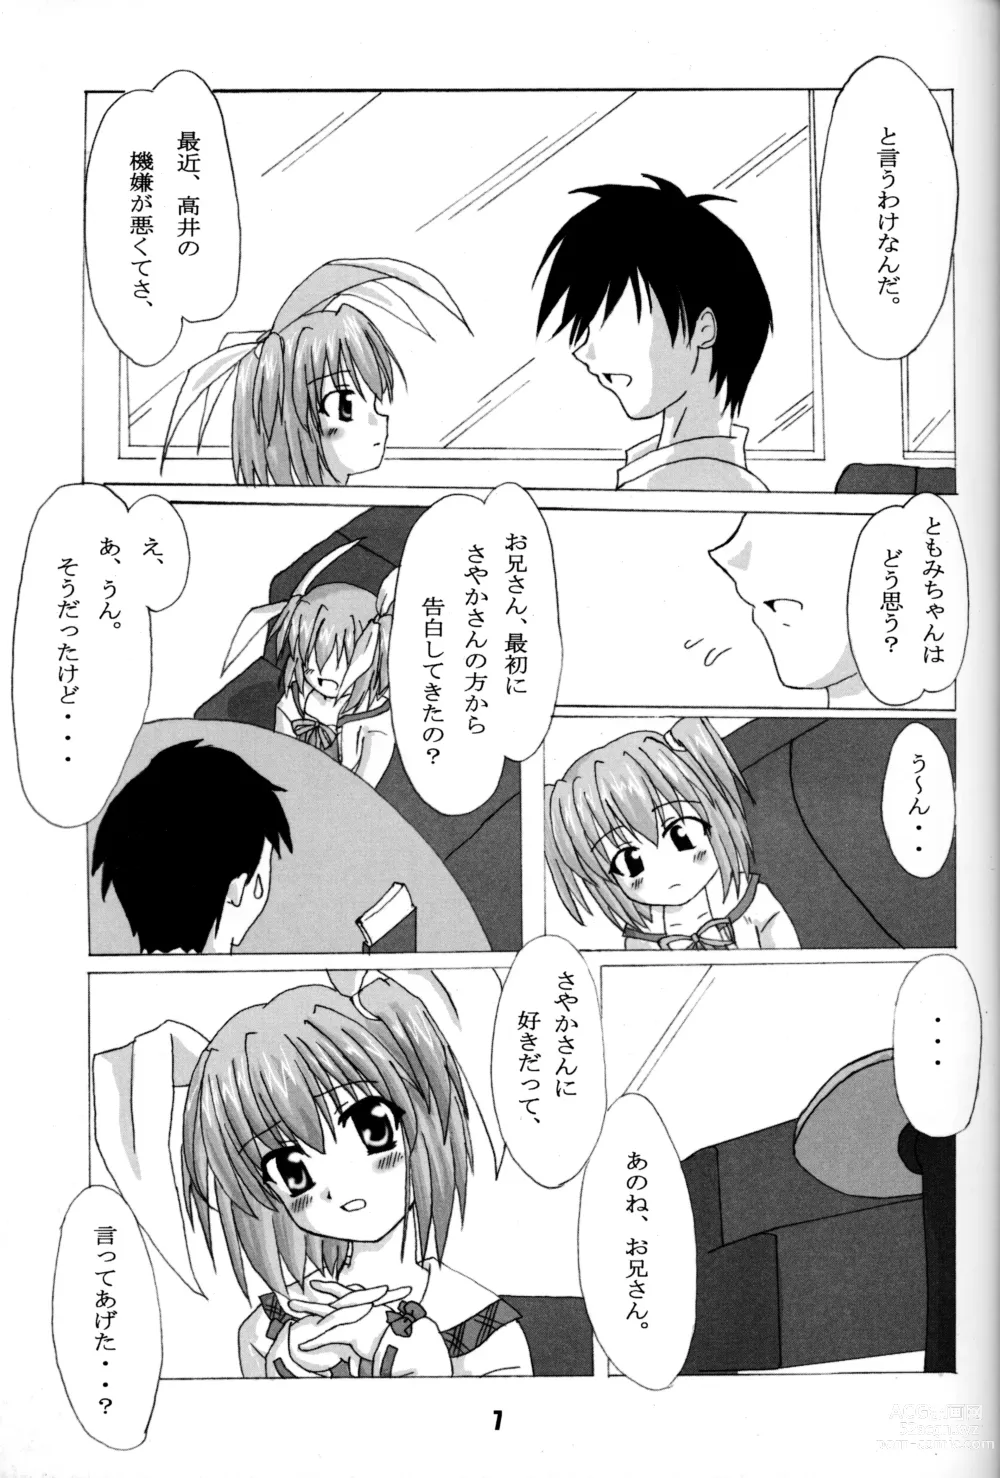 Page 6 of doujinshi Rollin 6